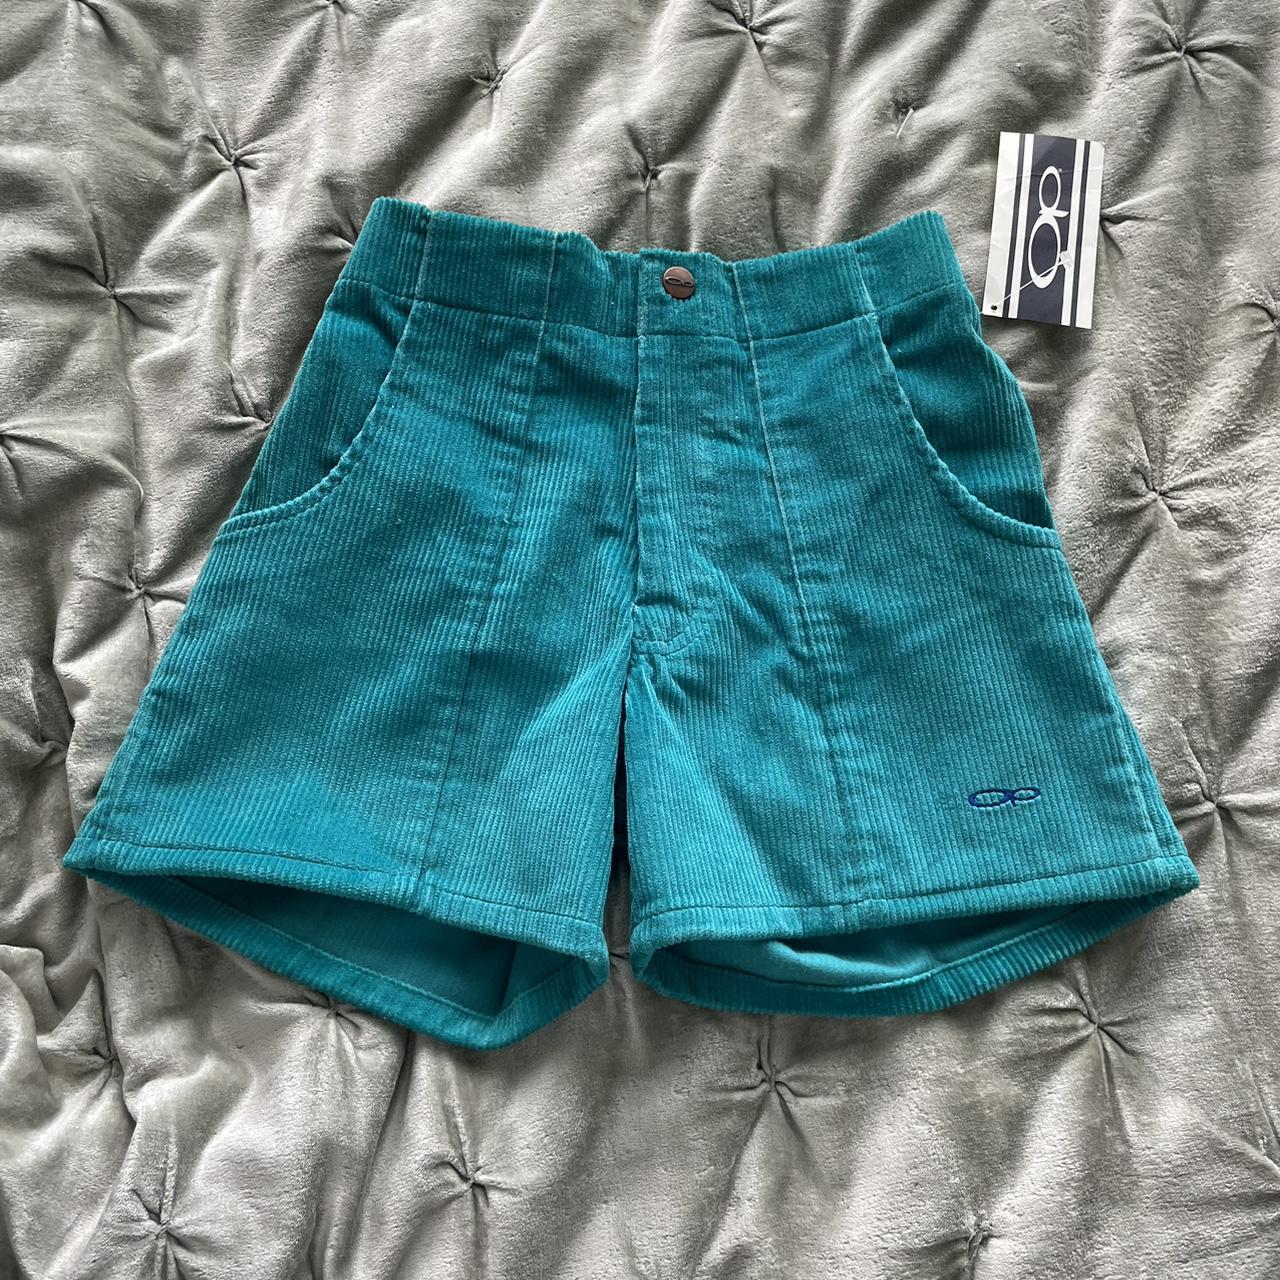 Ocean Pacific Women's Blue Shorts